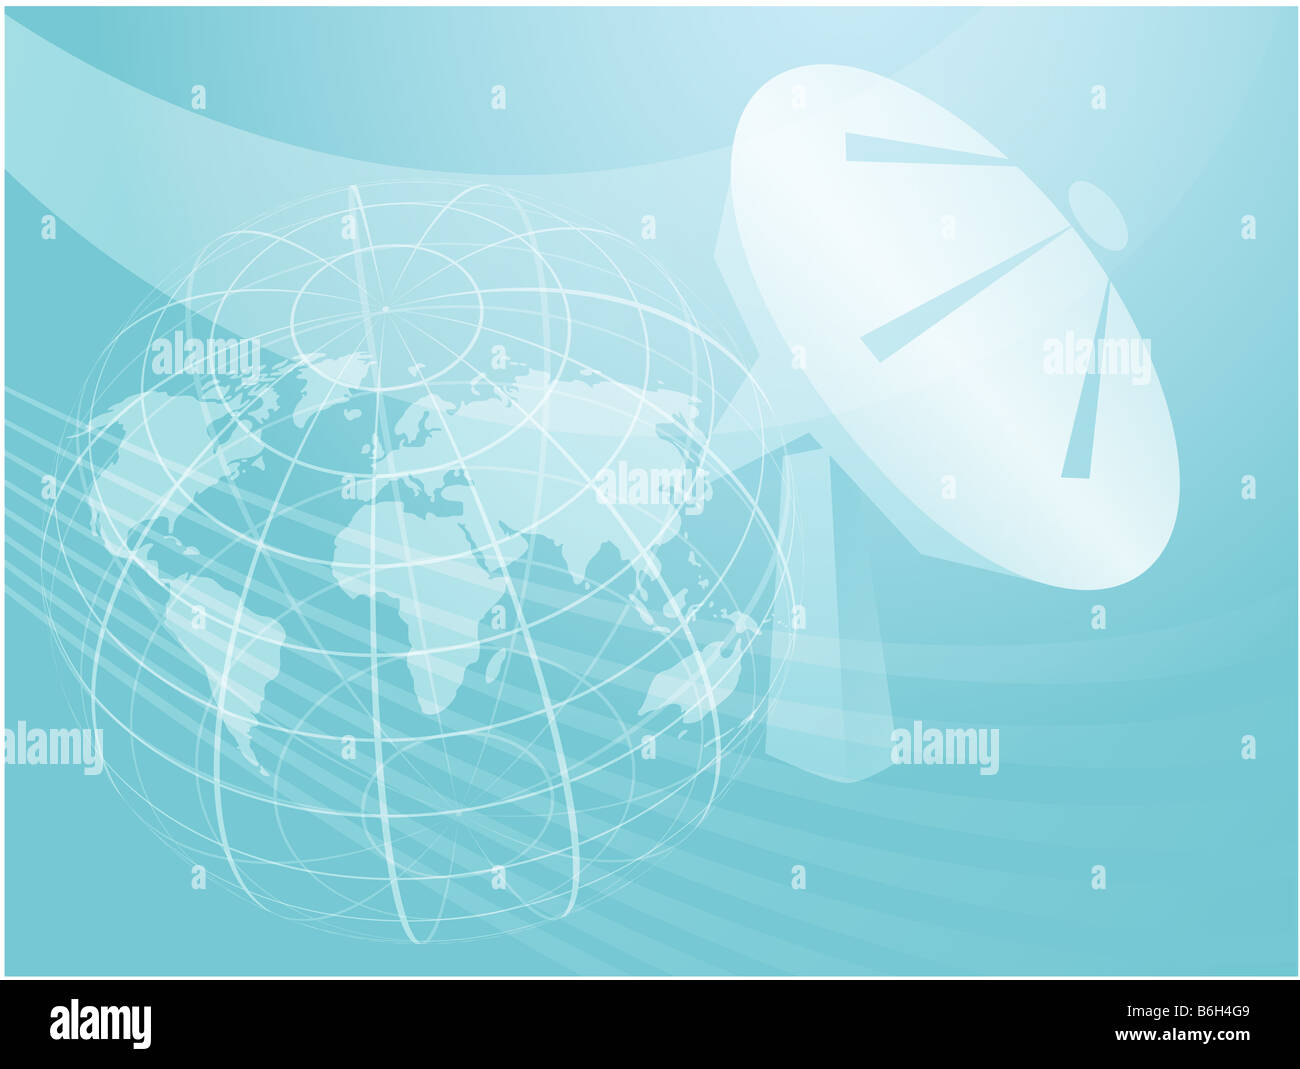 Satellite dish clipart illustrating advanced tele communications Stock Photo